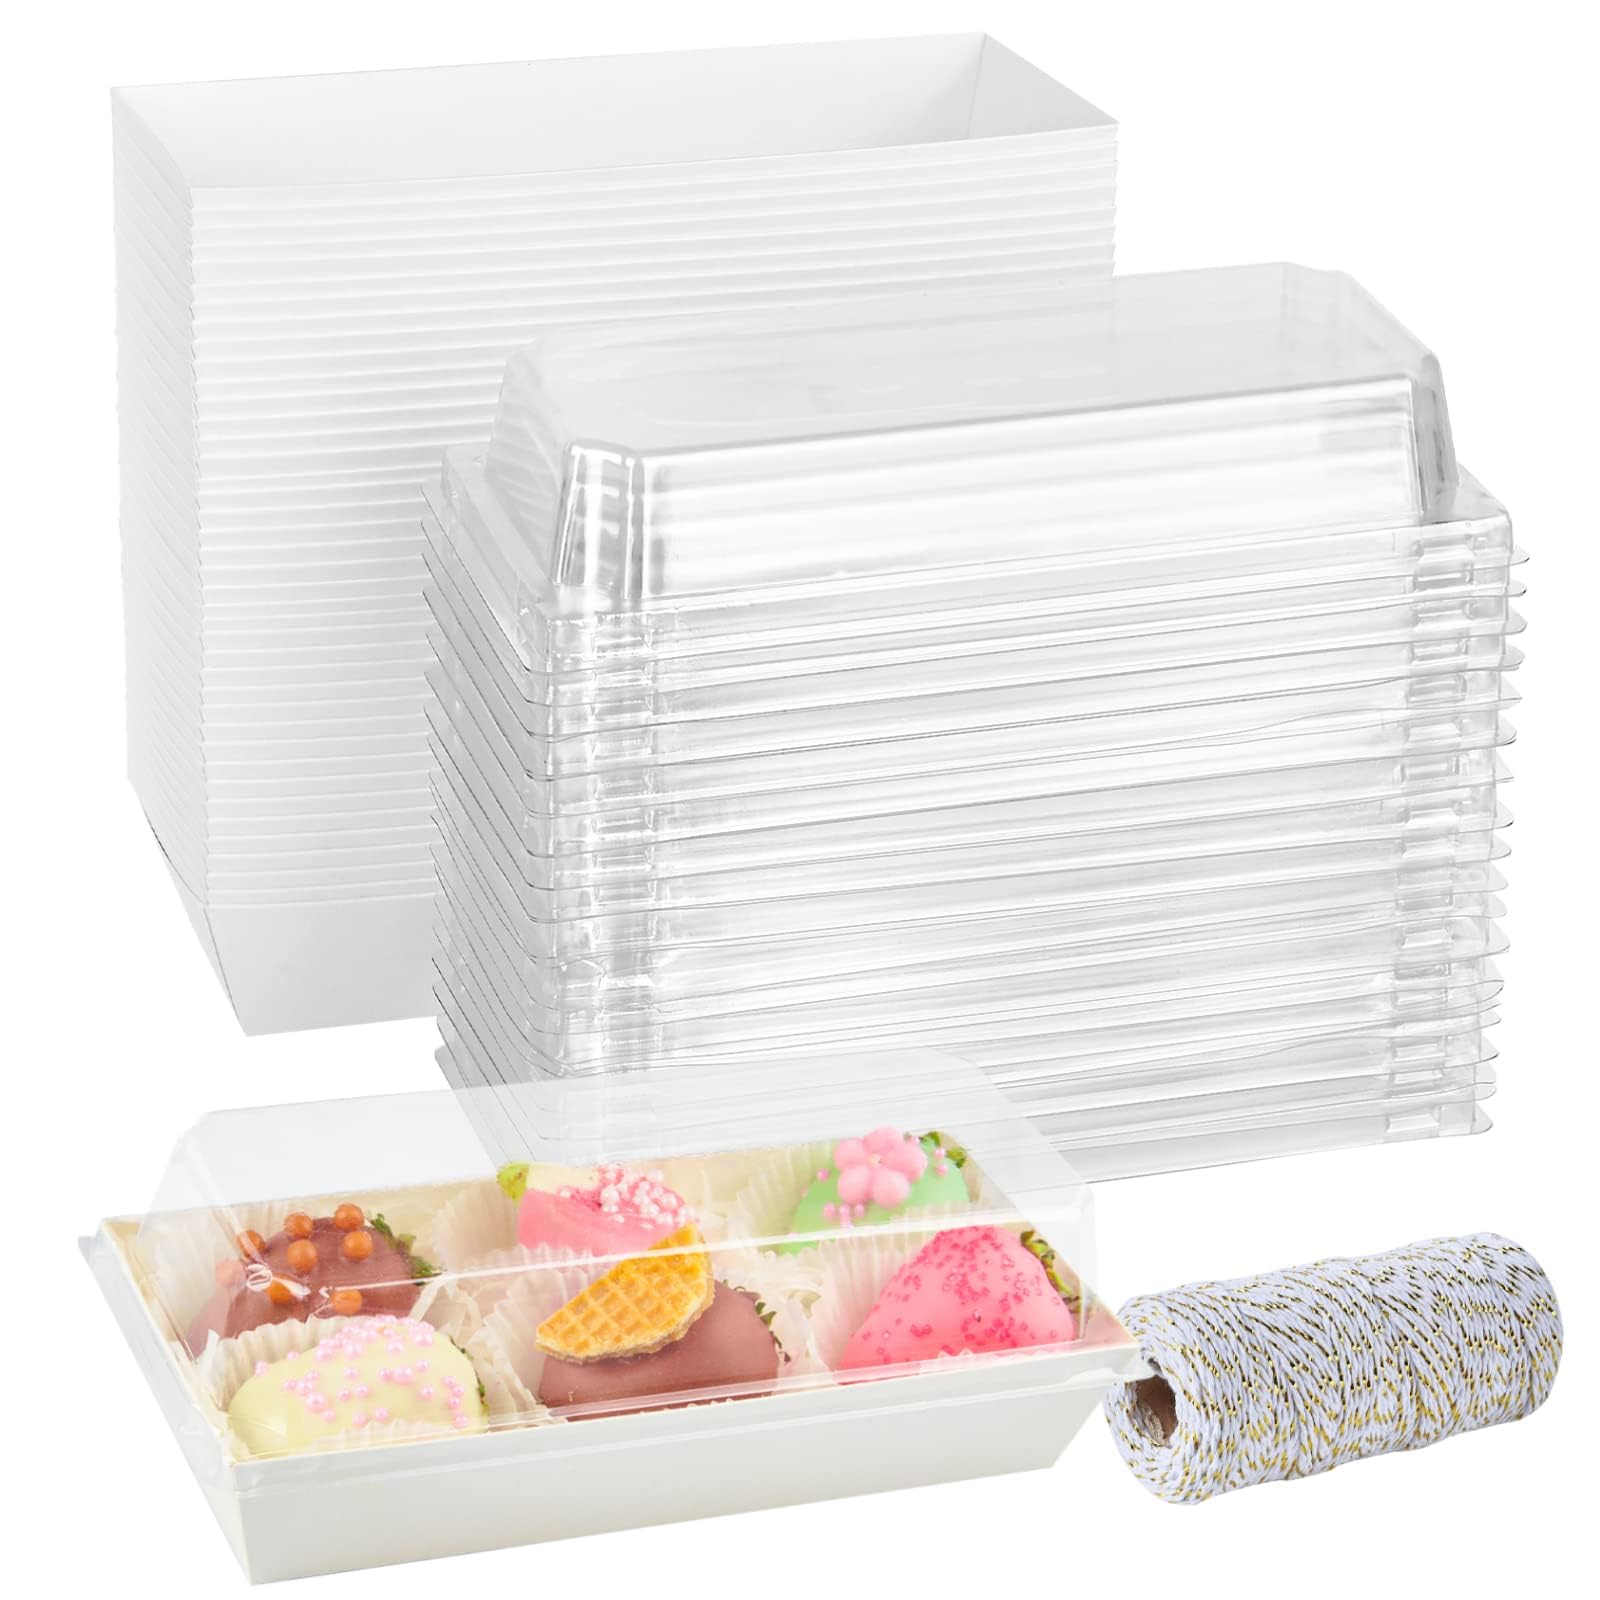 Share 98+ cake slice boxes amazon - in.daotaonec